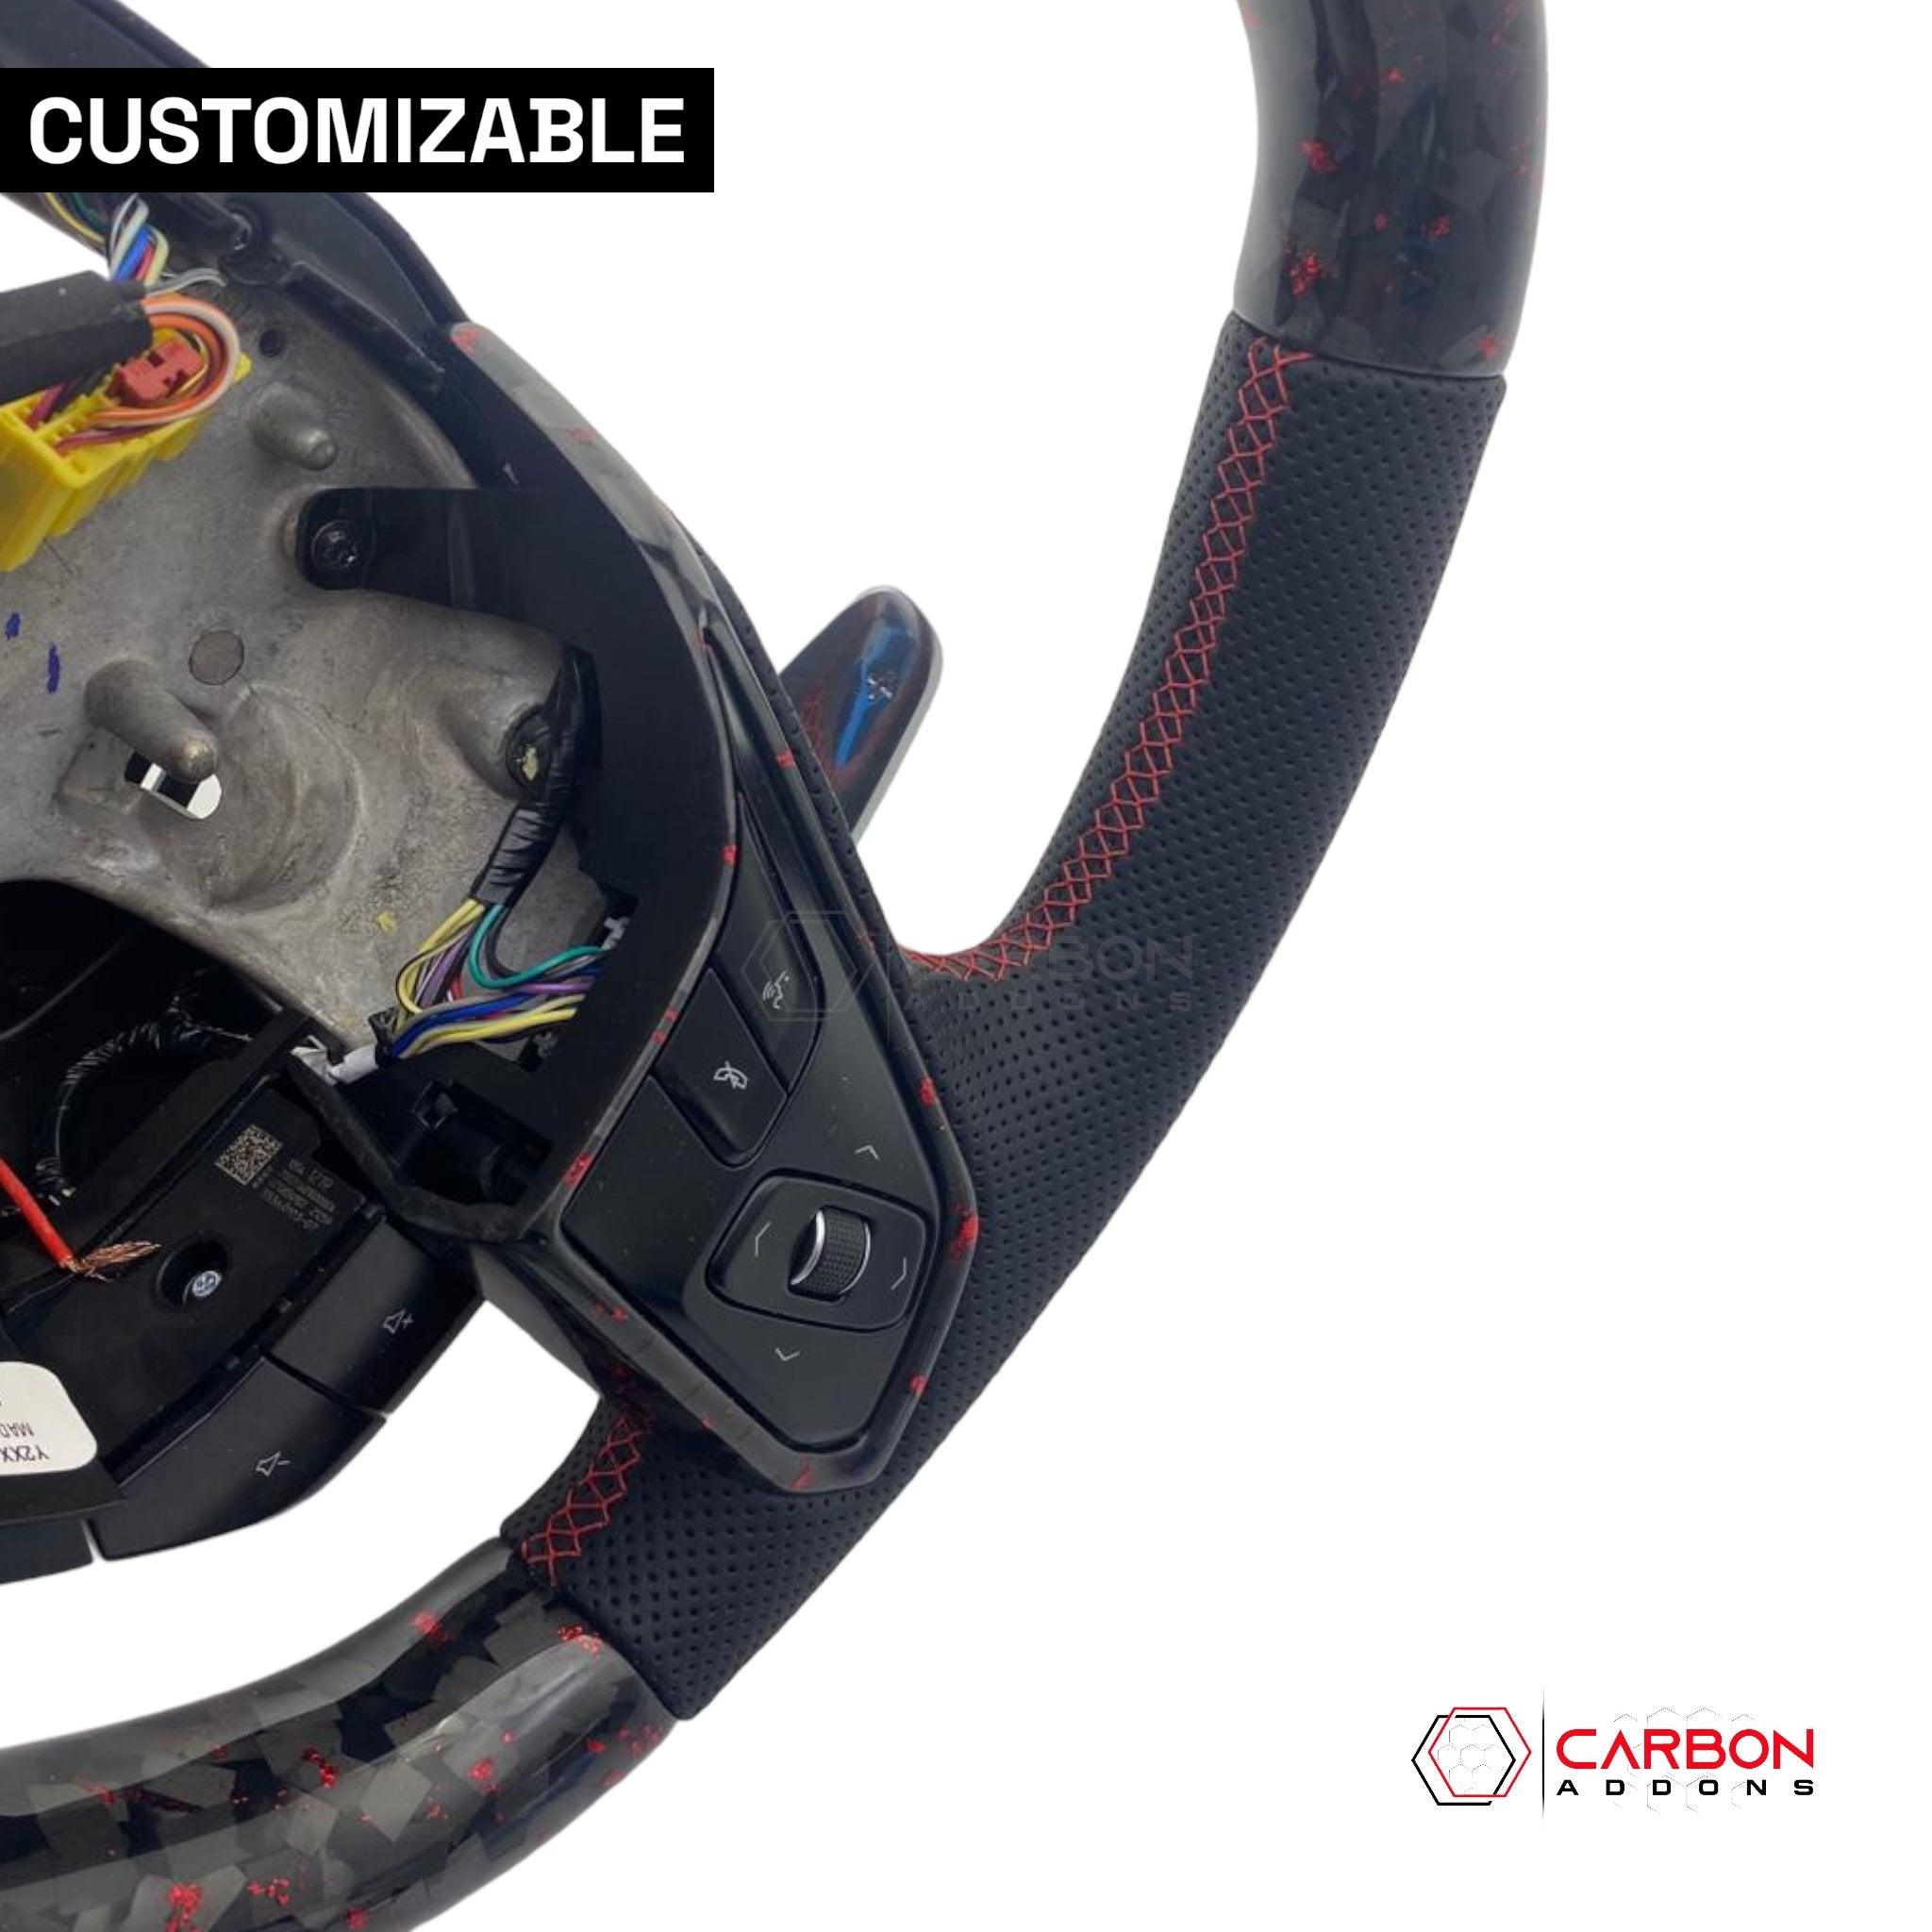 [Complete/Heated] C8 Corvette 2020+ Customizable Carbon Fiber Steering Wheel - carbonaddons Carbon Fiber Parts, Accessories, Upgrades, Mods